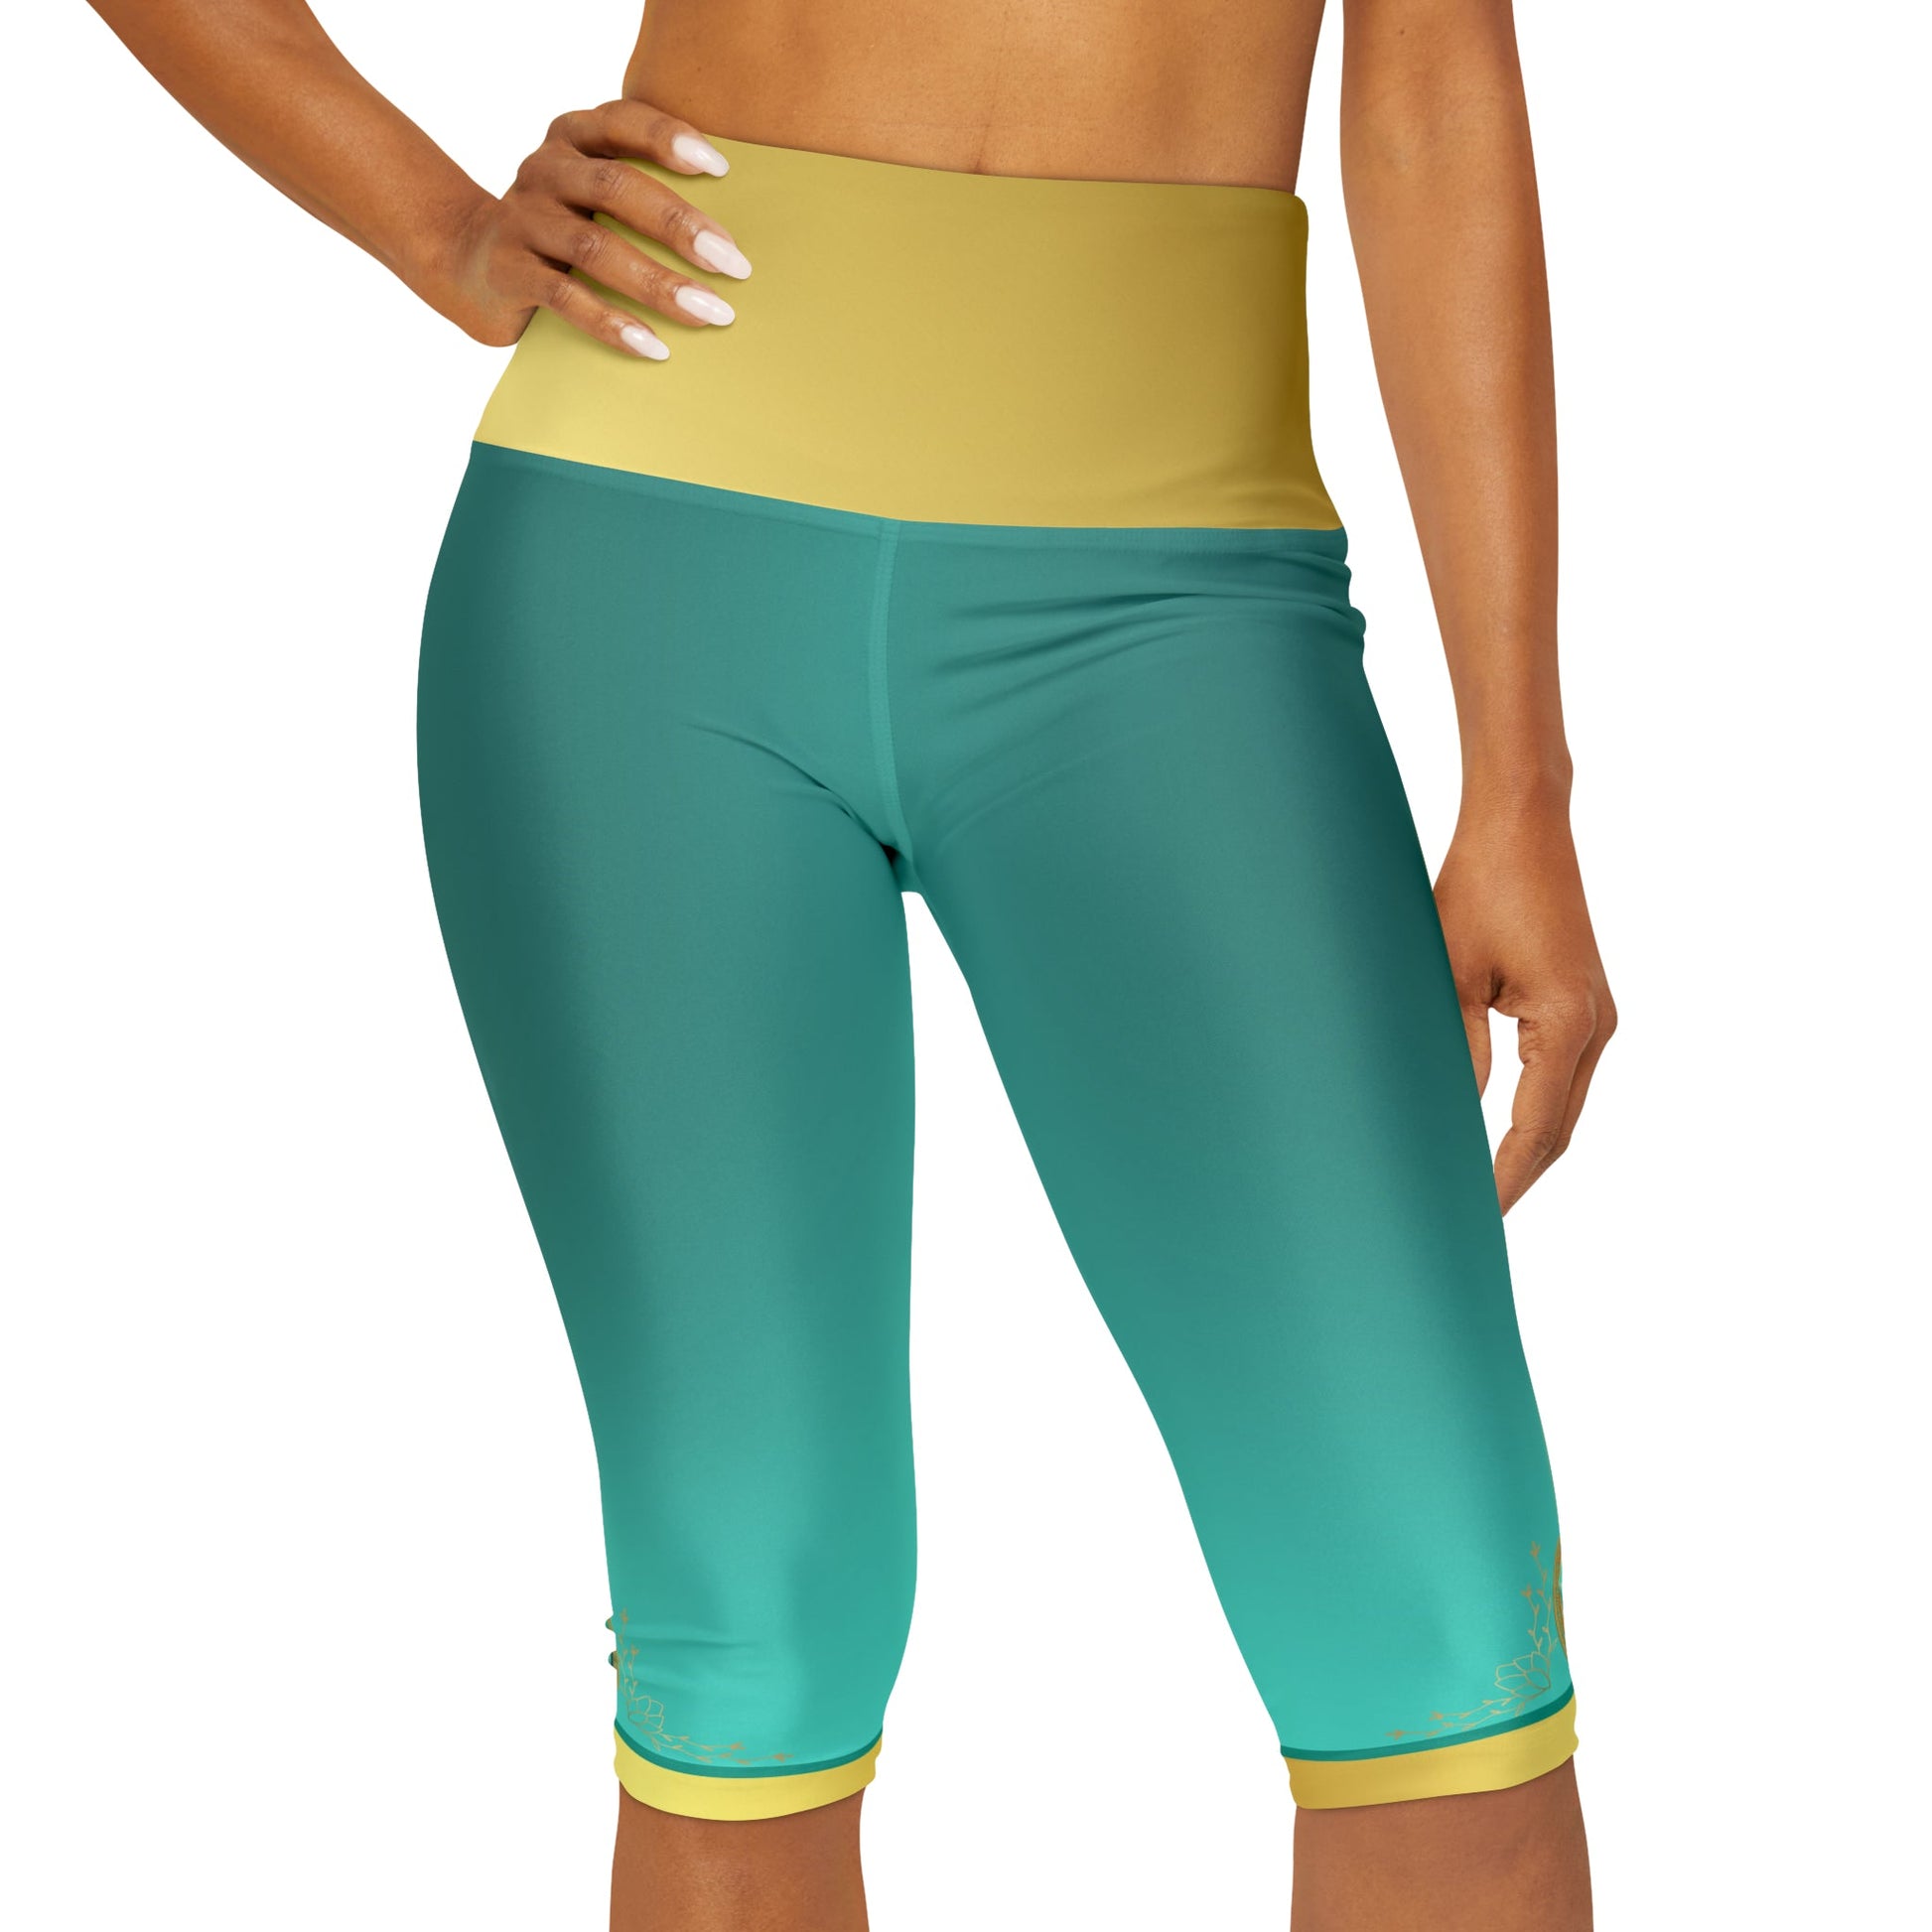 Jasmine Yoga Capri Leggings- Running Costume, Cosplay, Park Wear active wearAladdinAll Over Print#tag4##tag5##tag6#